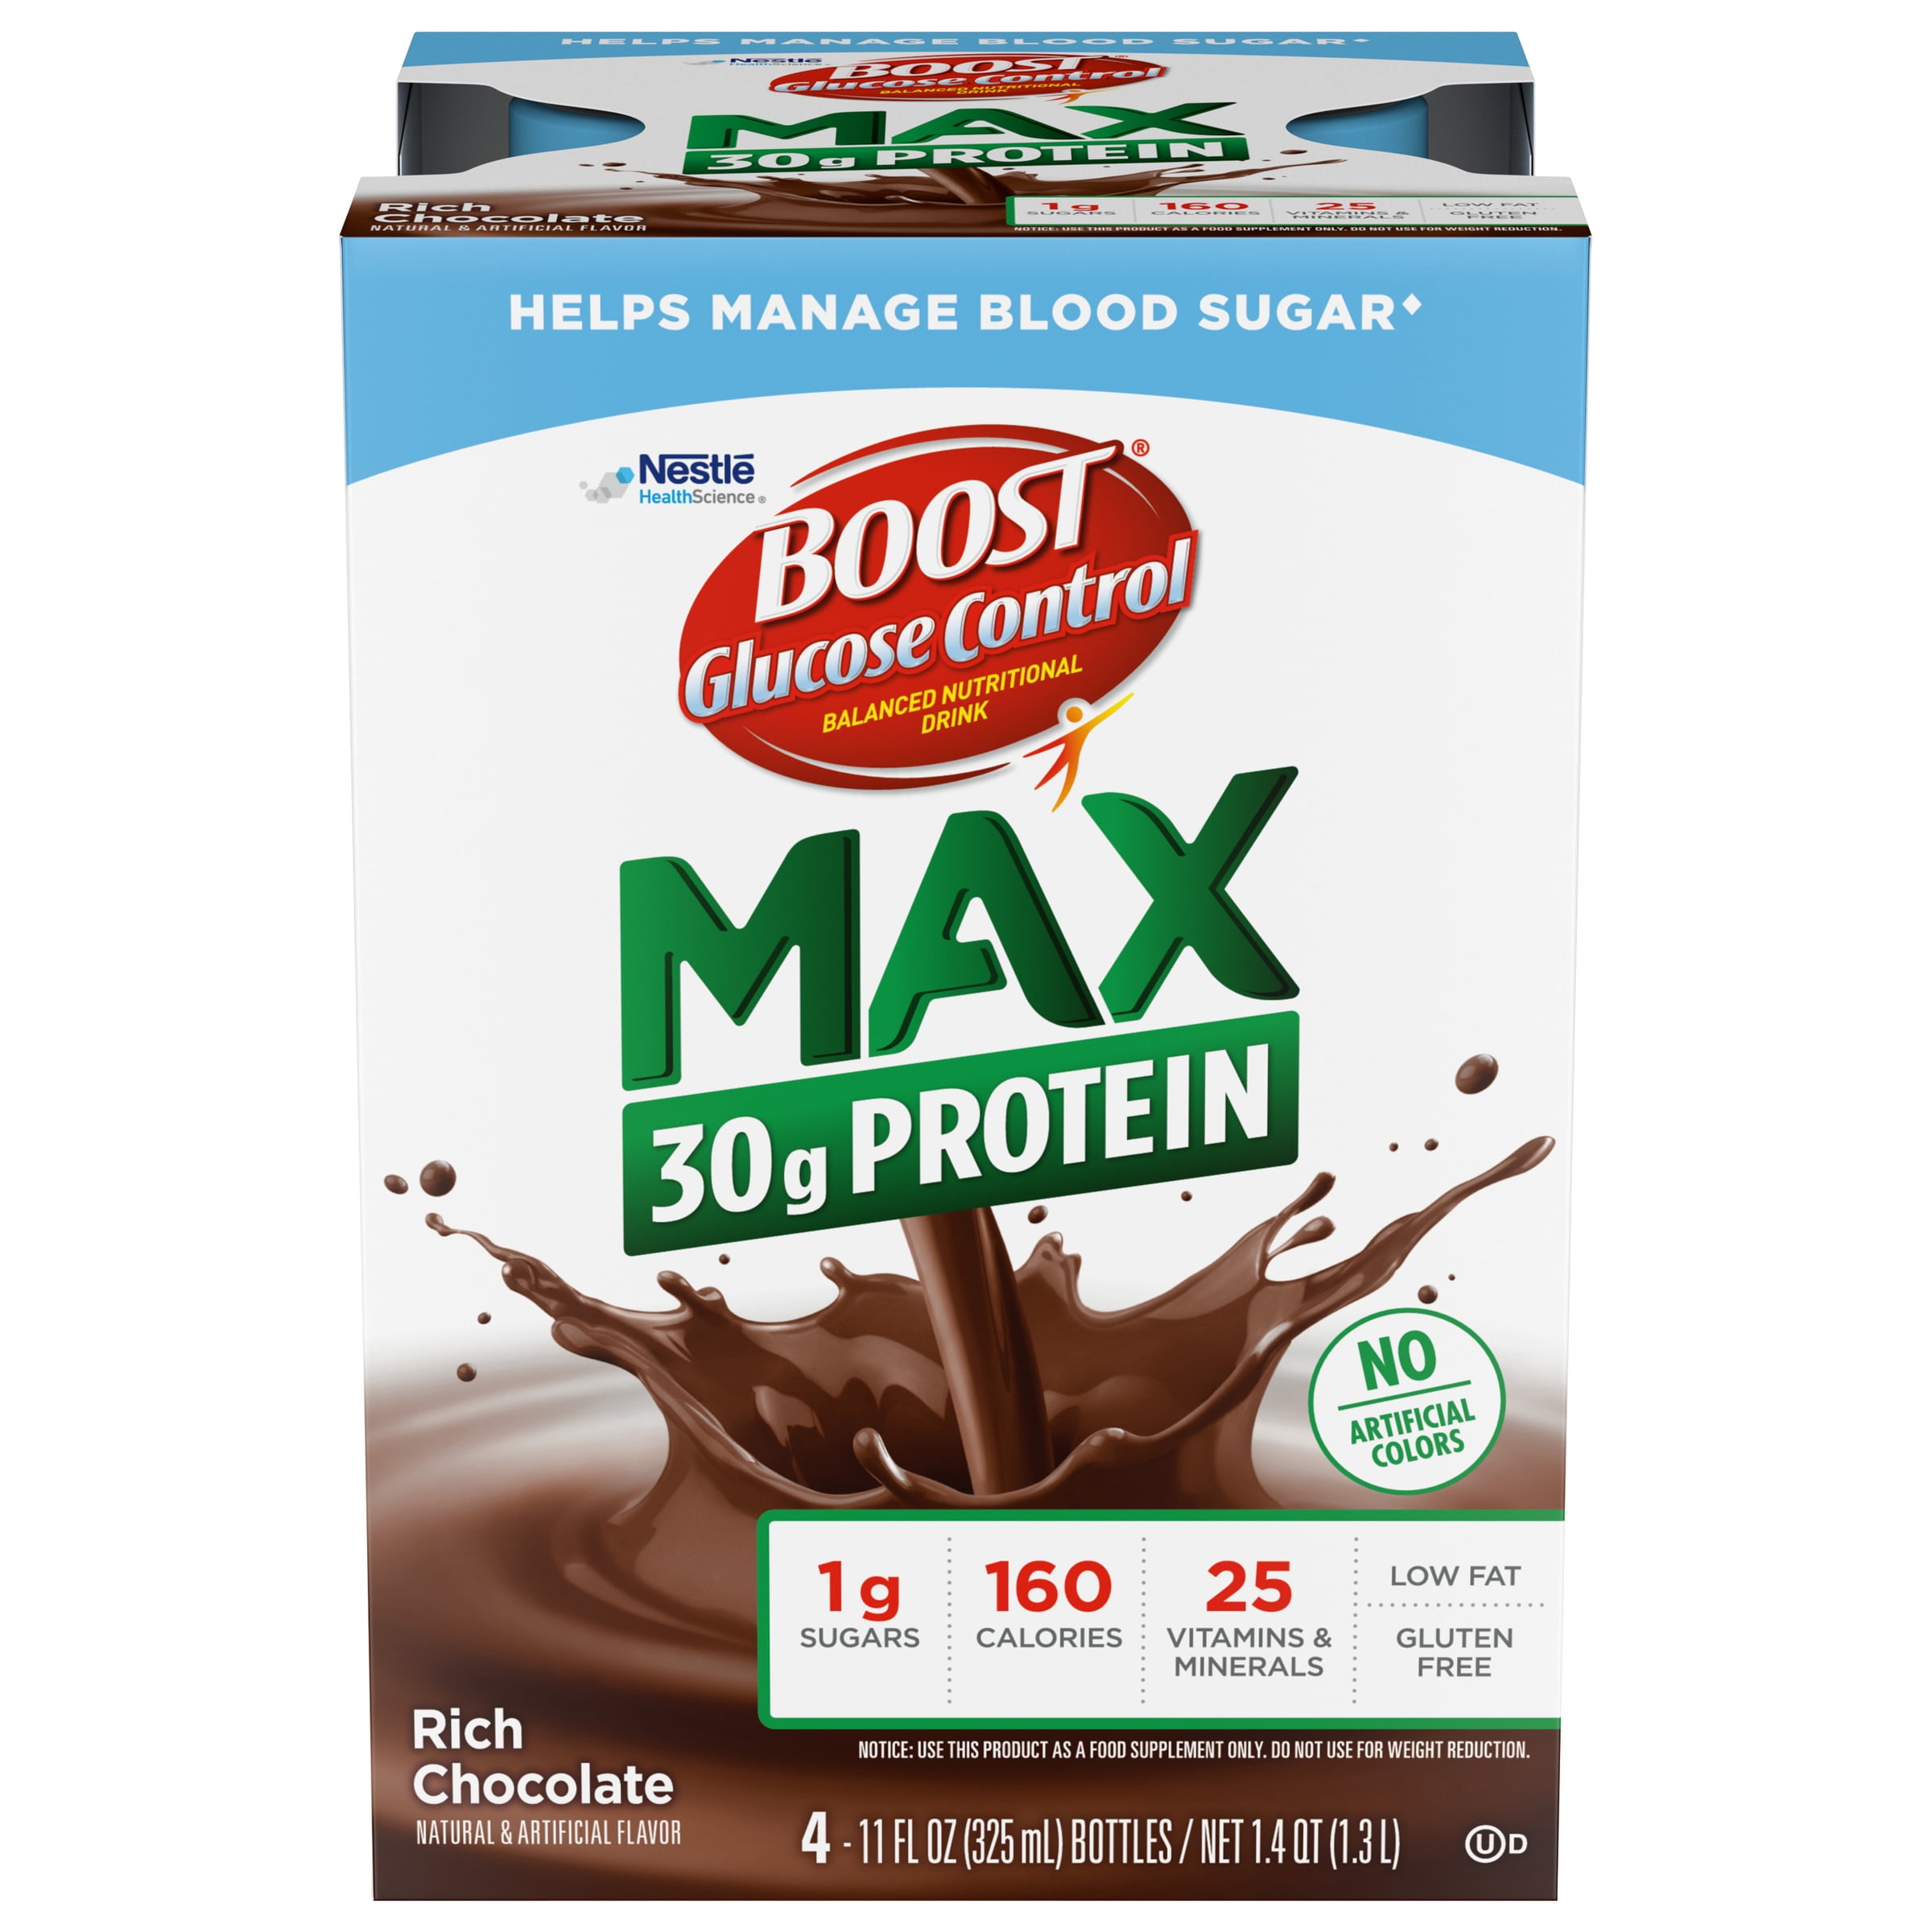 BOOST Glucose Control Max 30g Protein Nutritional Drink, Rich Chocolate, 4 - 11 fl oz Bottles